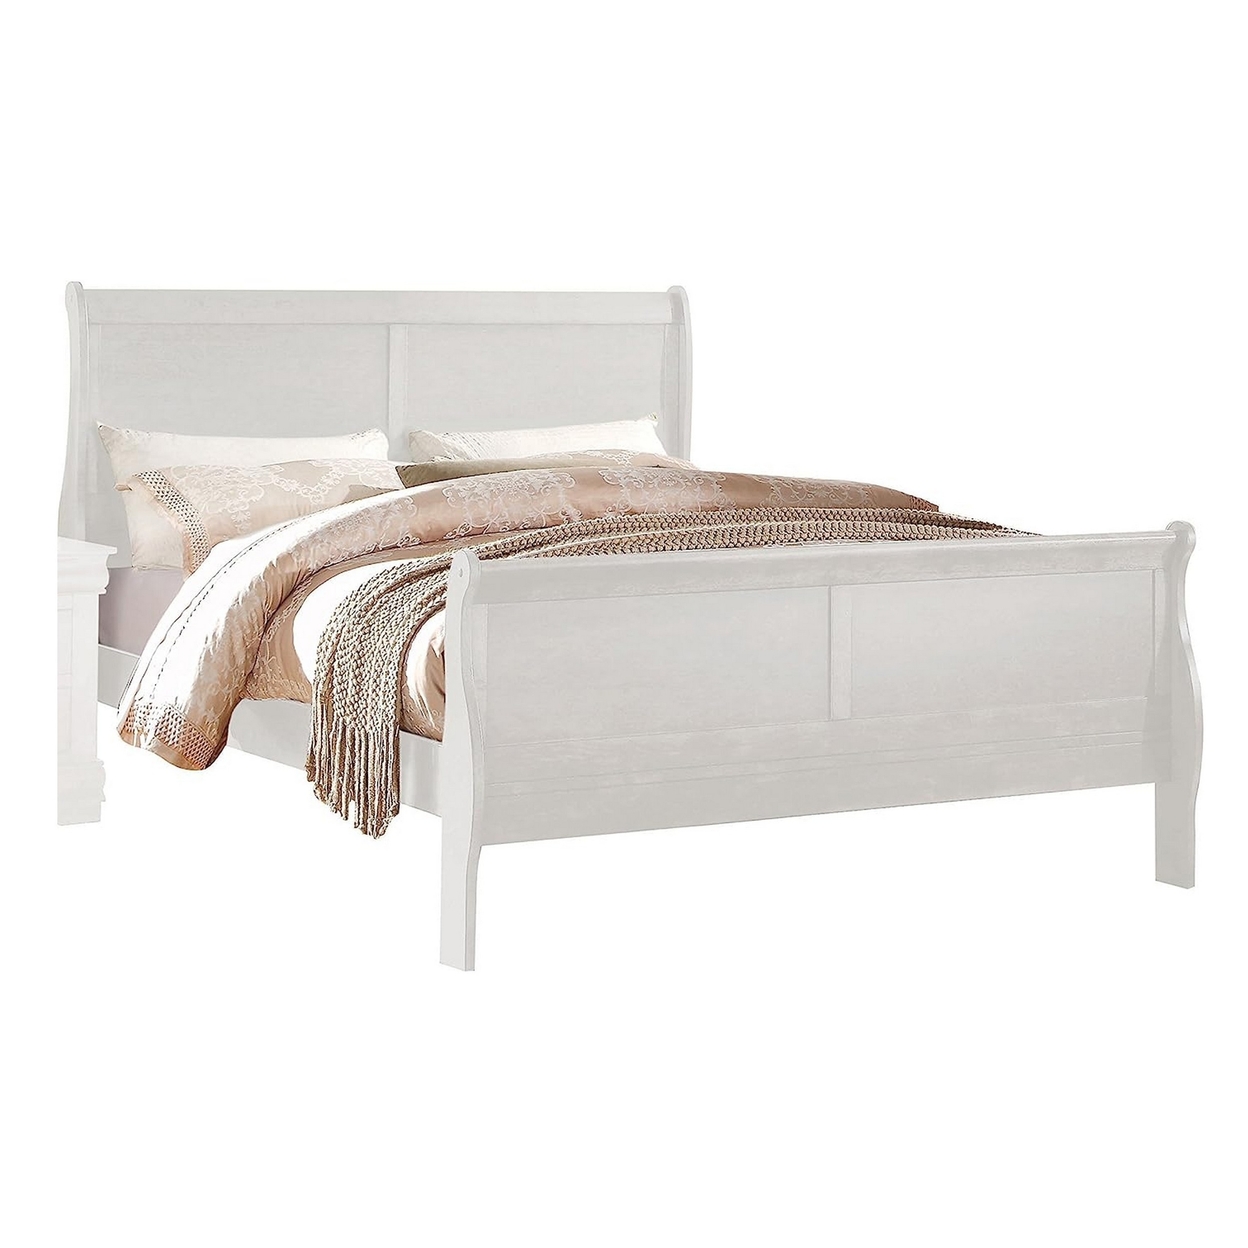 Nin Queen Size Sleigh Bed, Minimalist Style Headboard, Classic White Wood- Saltoro Sherpi